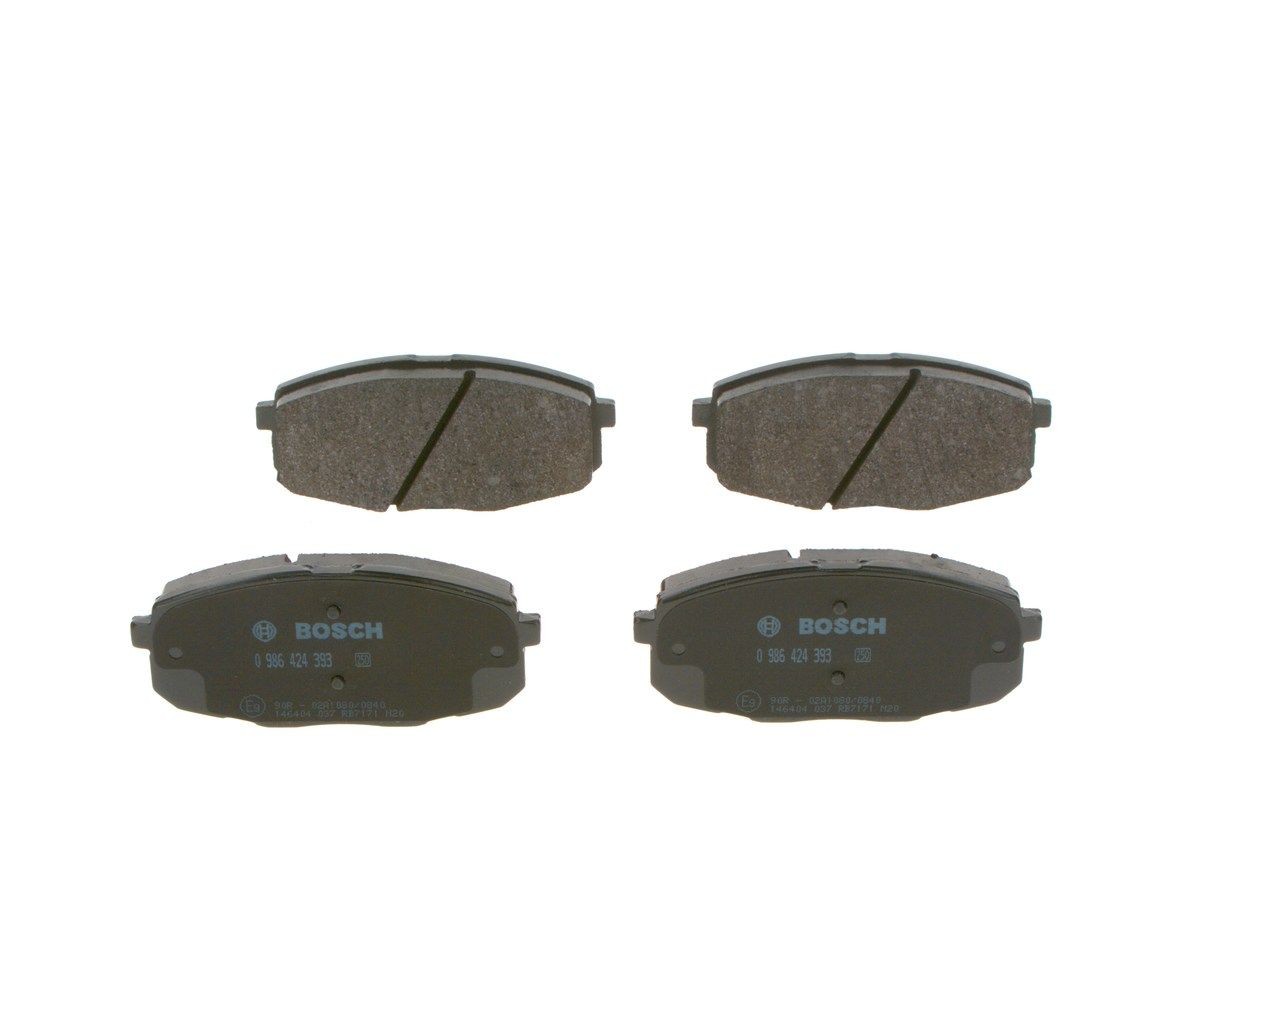 BOSCH 23987 Disc pads Low-Metallic, with integrated wear sensor